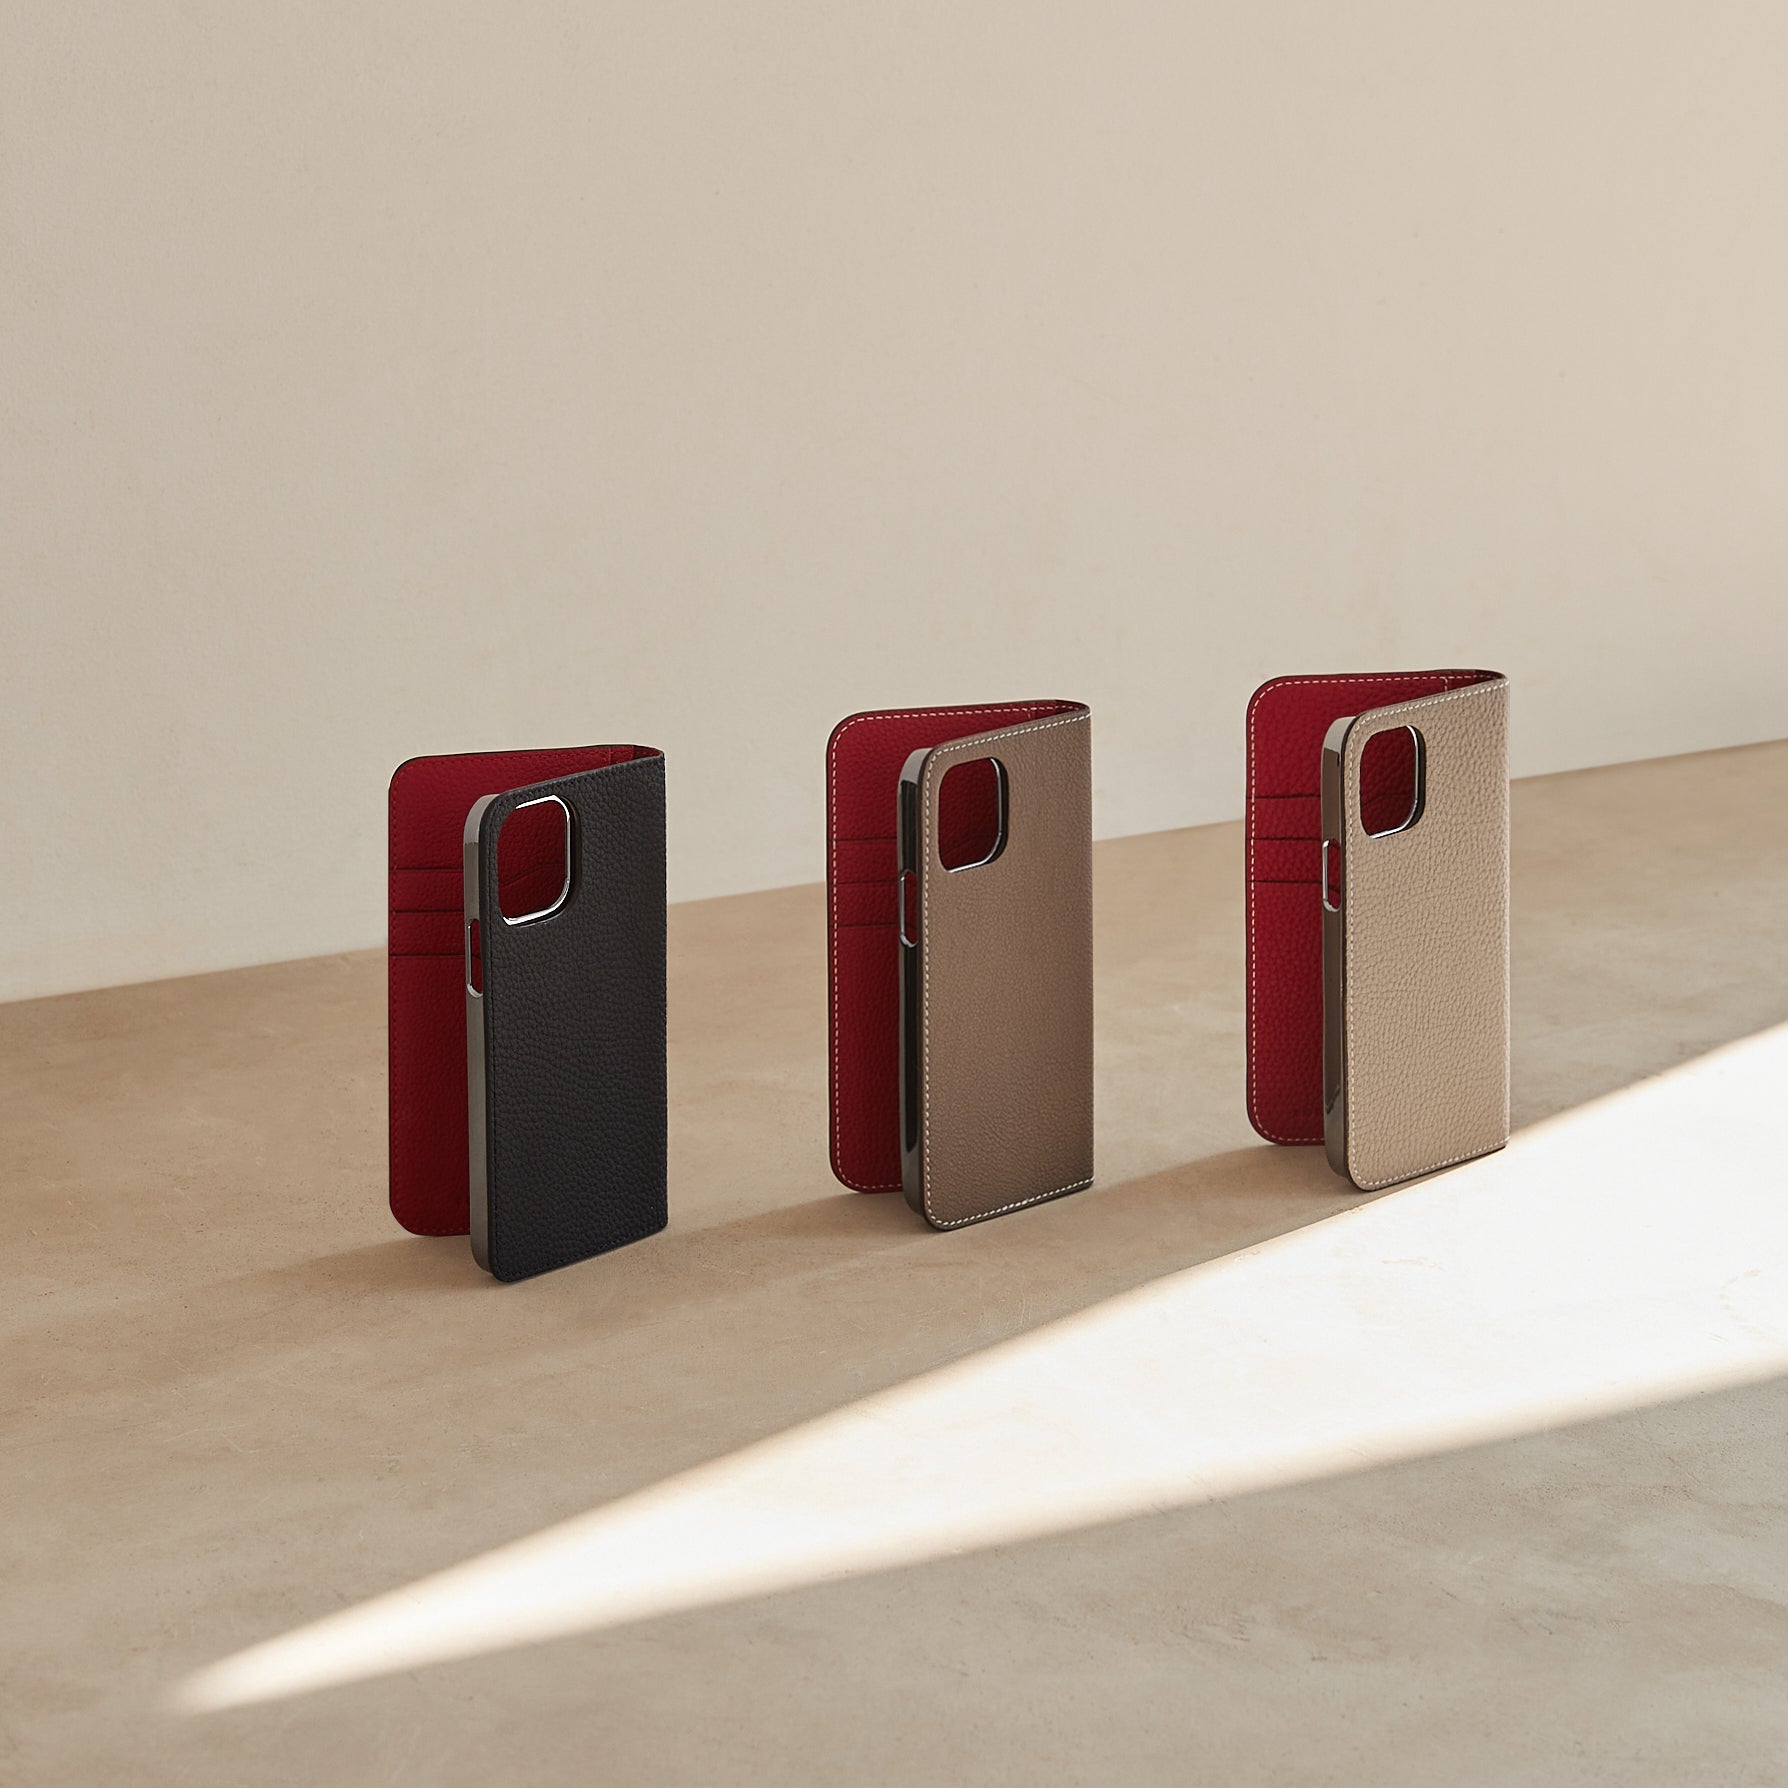 BONAVENTURA iPhone Diary Cases aus Fjord-Leder in verschiedenen stilvollen Farbkombinationen.